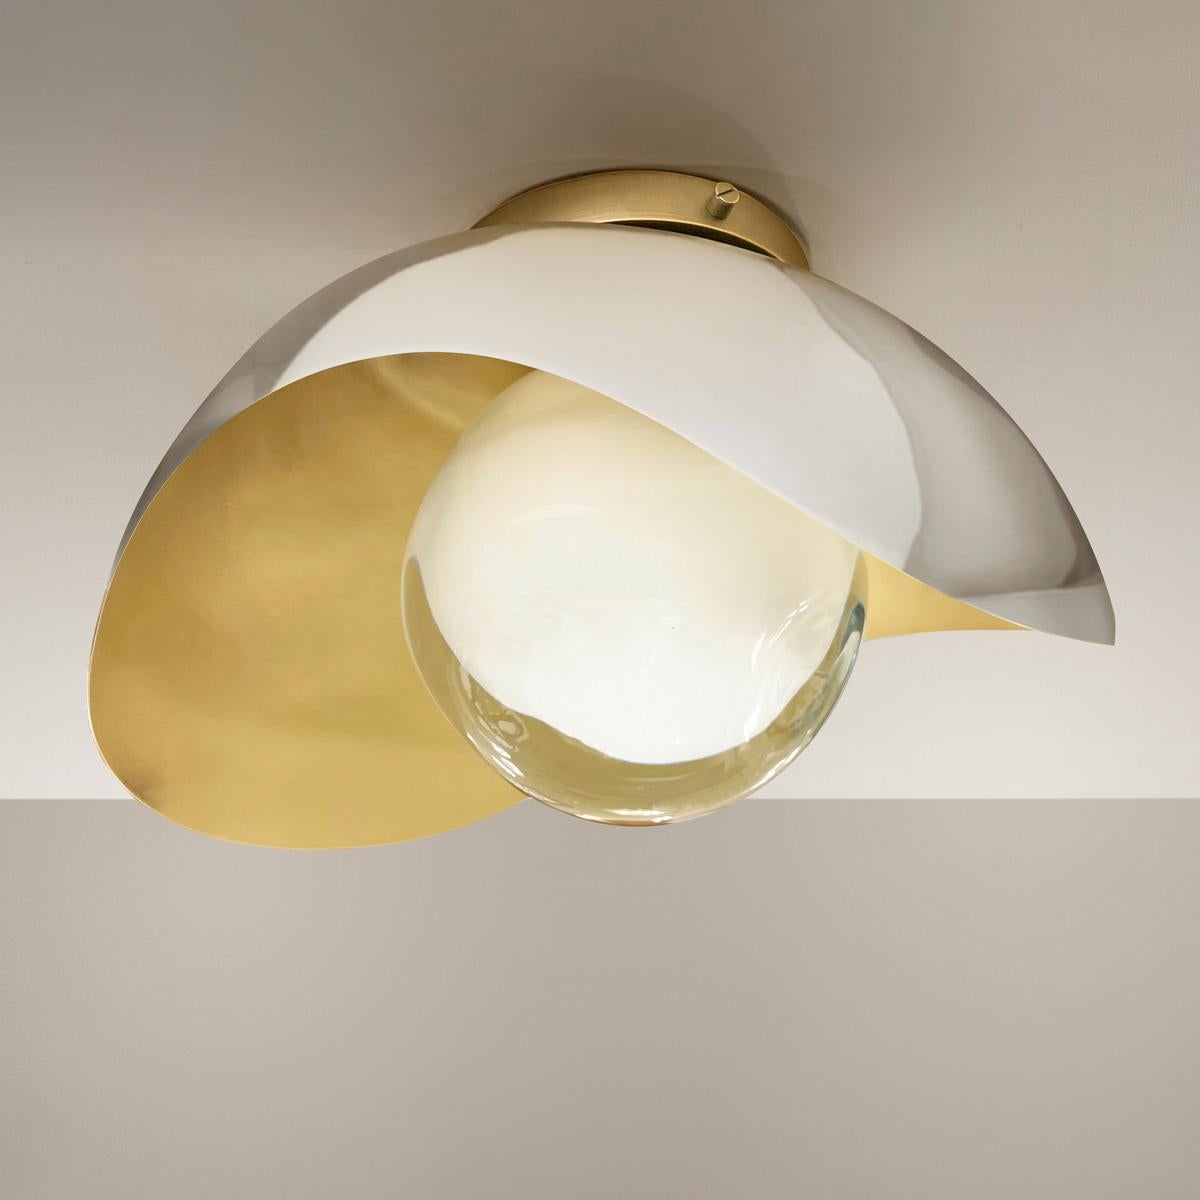 Perla Flushmount Ceiling Light by Gaspare Asaro-Brass Finish For Sale 1